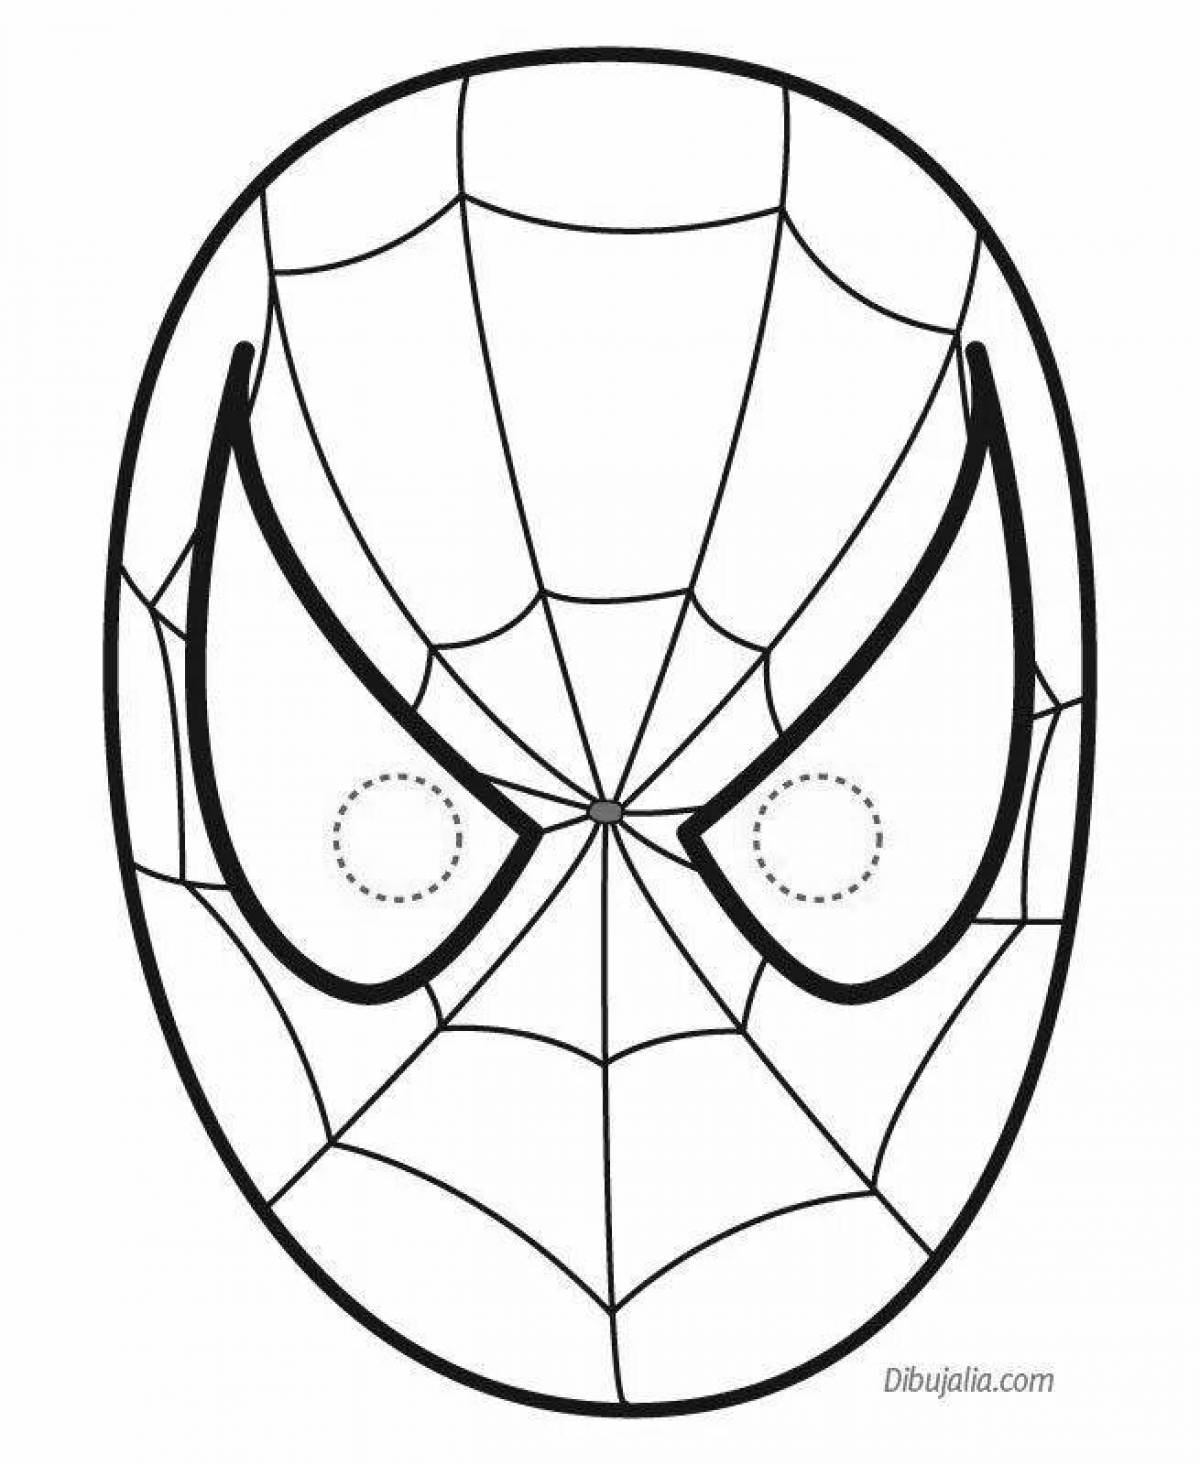 Маска формата а4. Маска раскраска. Маска человека паука для раскрашивания. Маска человека паука для вырезания. Человек паук раскраска.